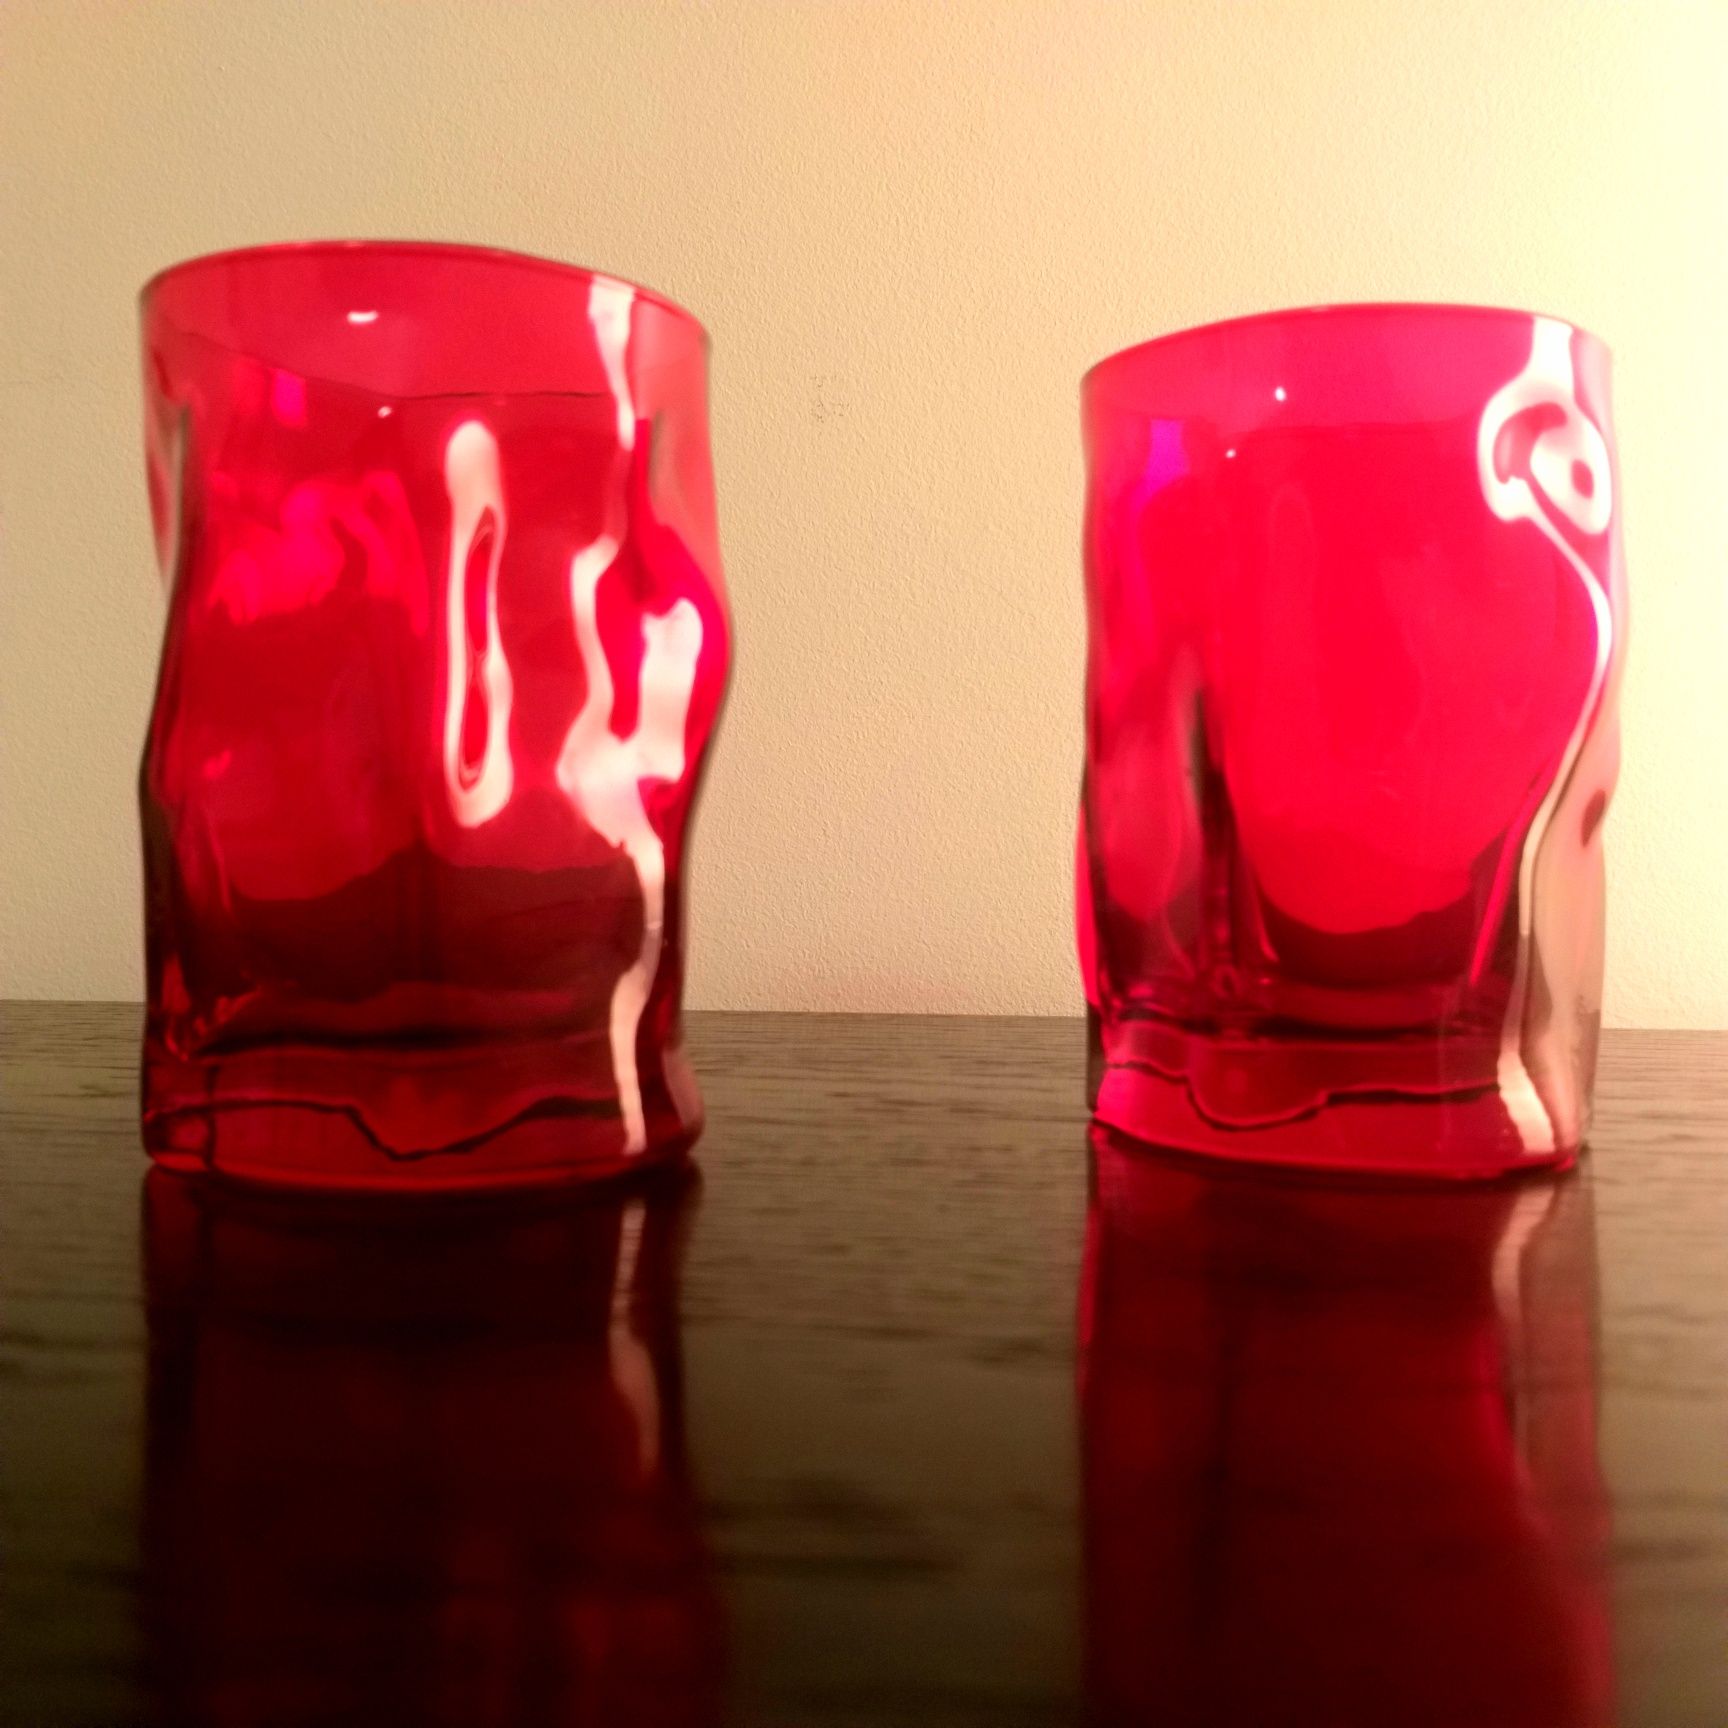 Vidro vermelho - peças decorativas (porta velas)